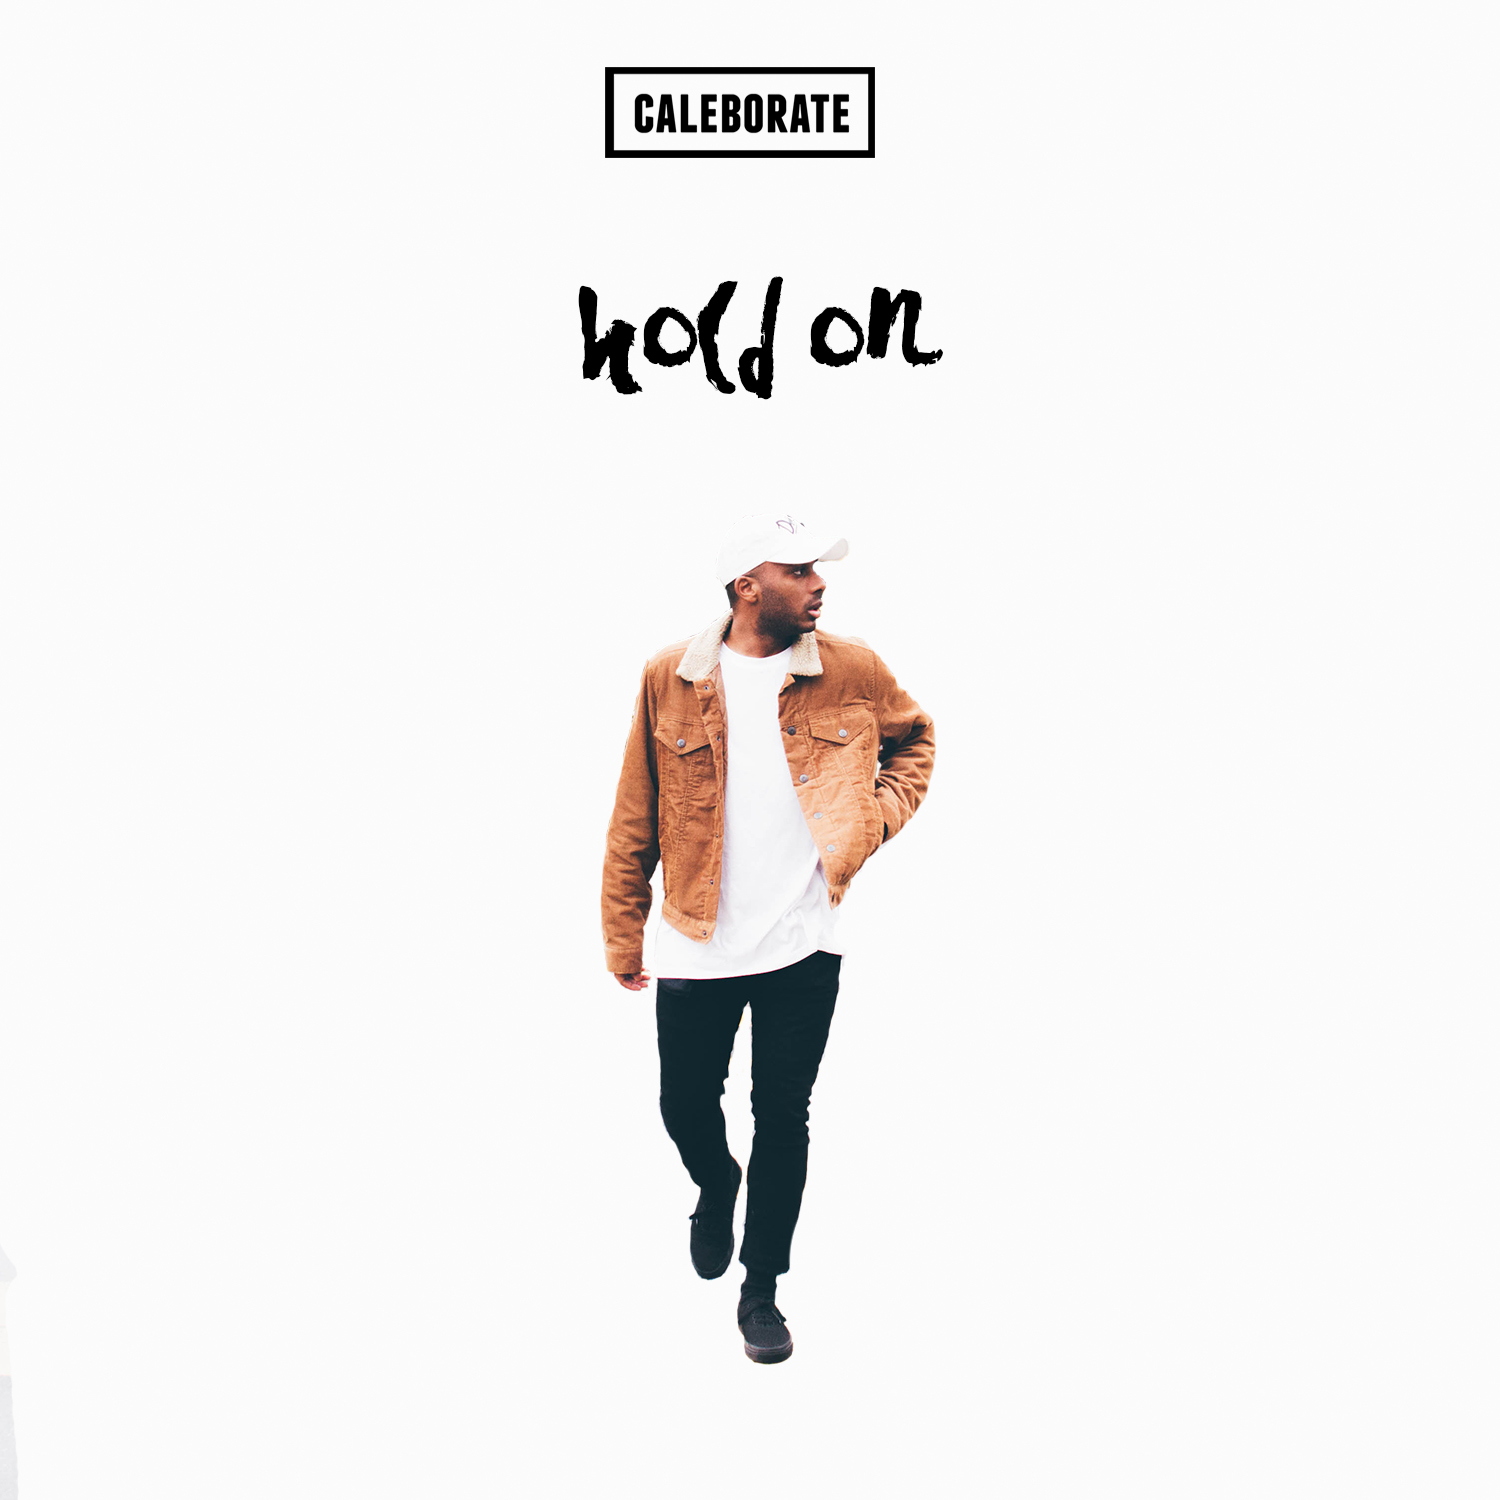 Caleborate – “Hold On” (Prod. By Kuya Beats & Cal-A)